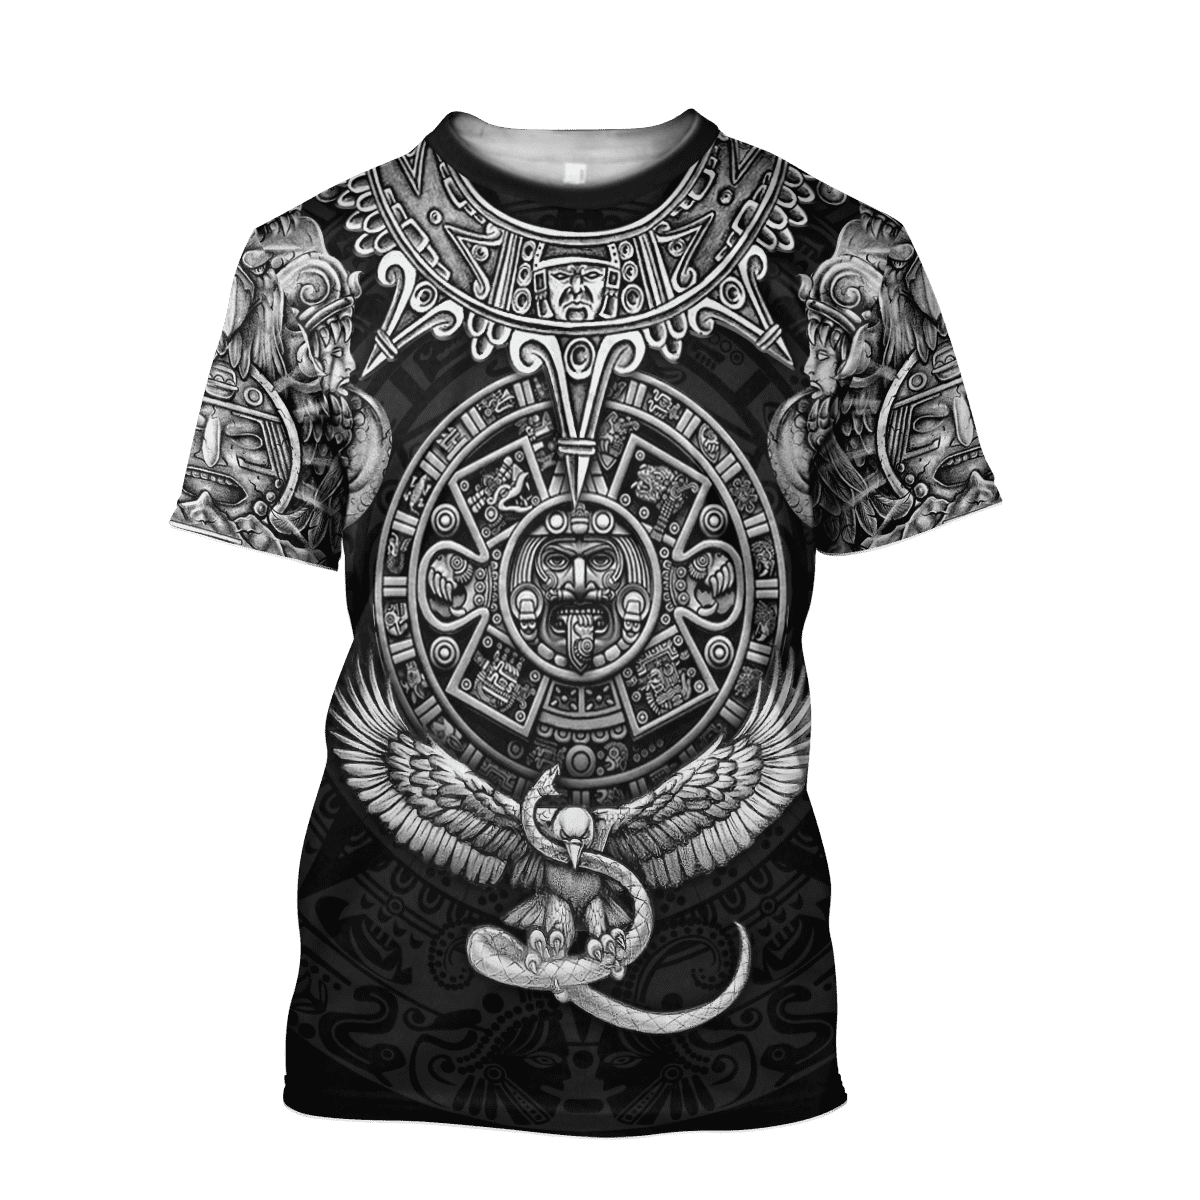 3D All Over Print Mexico Aztec Tattoo Calendar Eagle Snake Unisex Shirt for Men